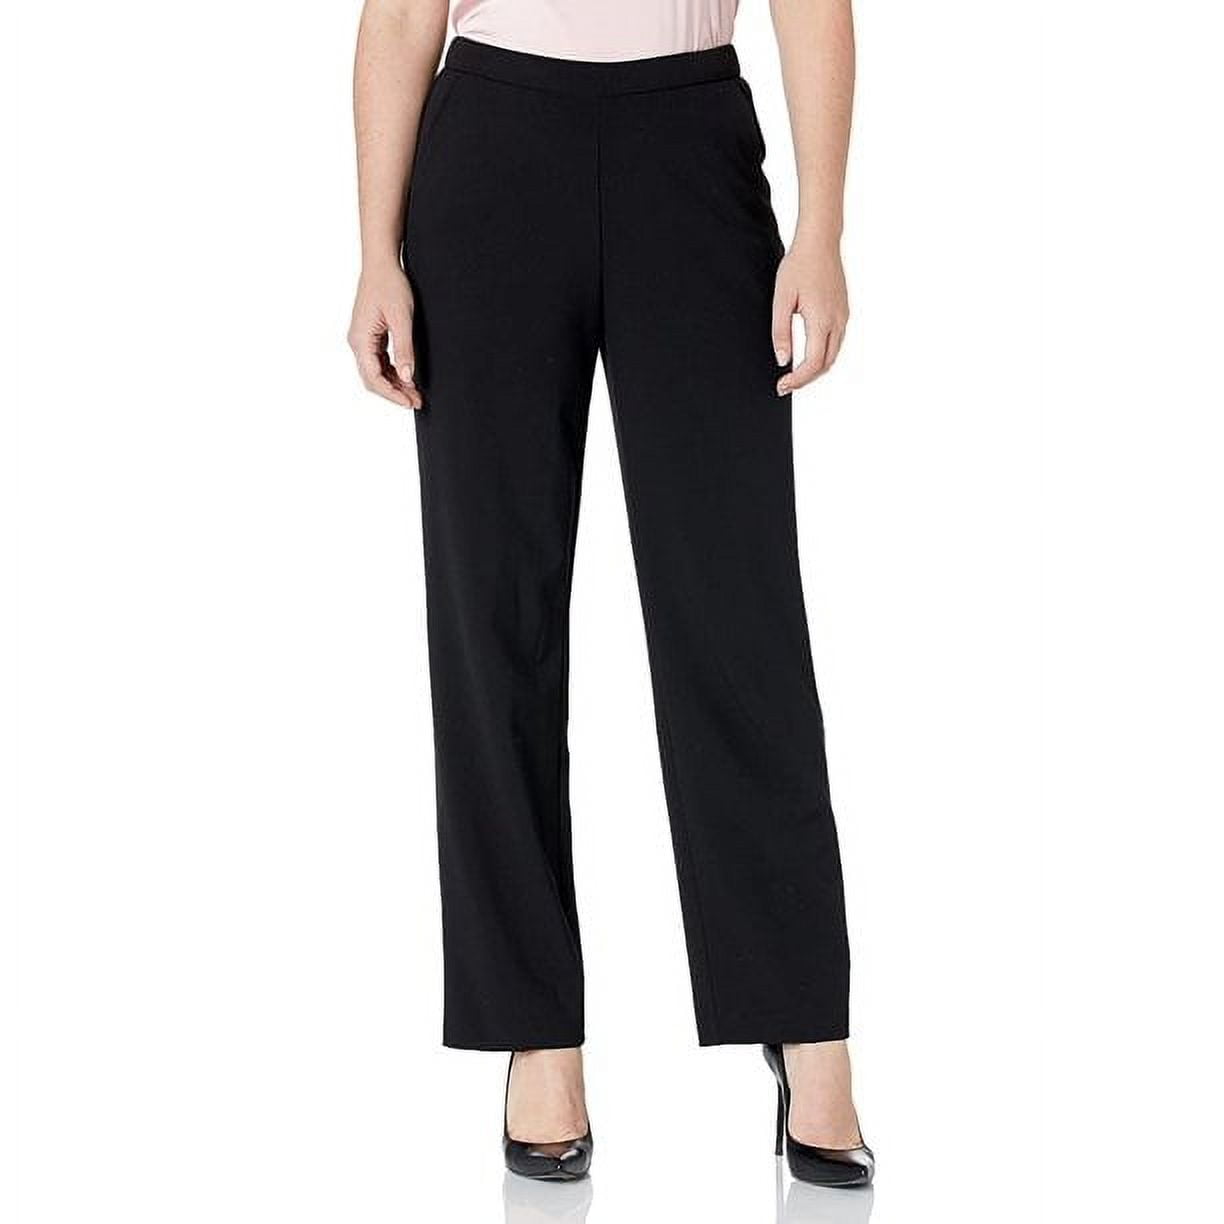 Briggs New York Women's Pull On Dress Pant Average Length &, Black, Size  14.0 